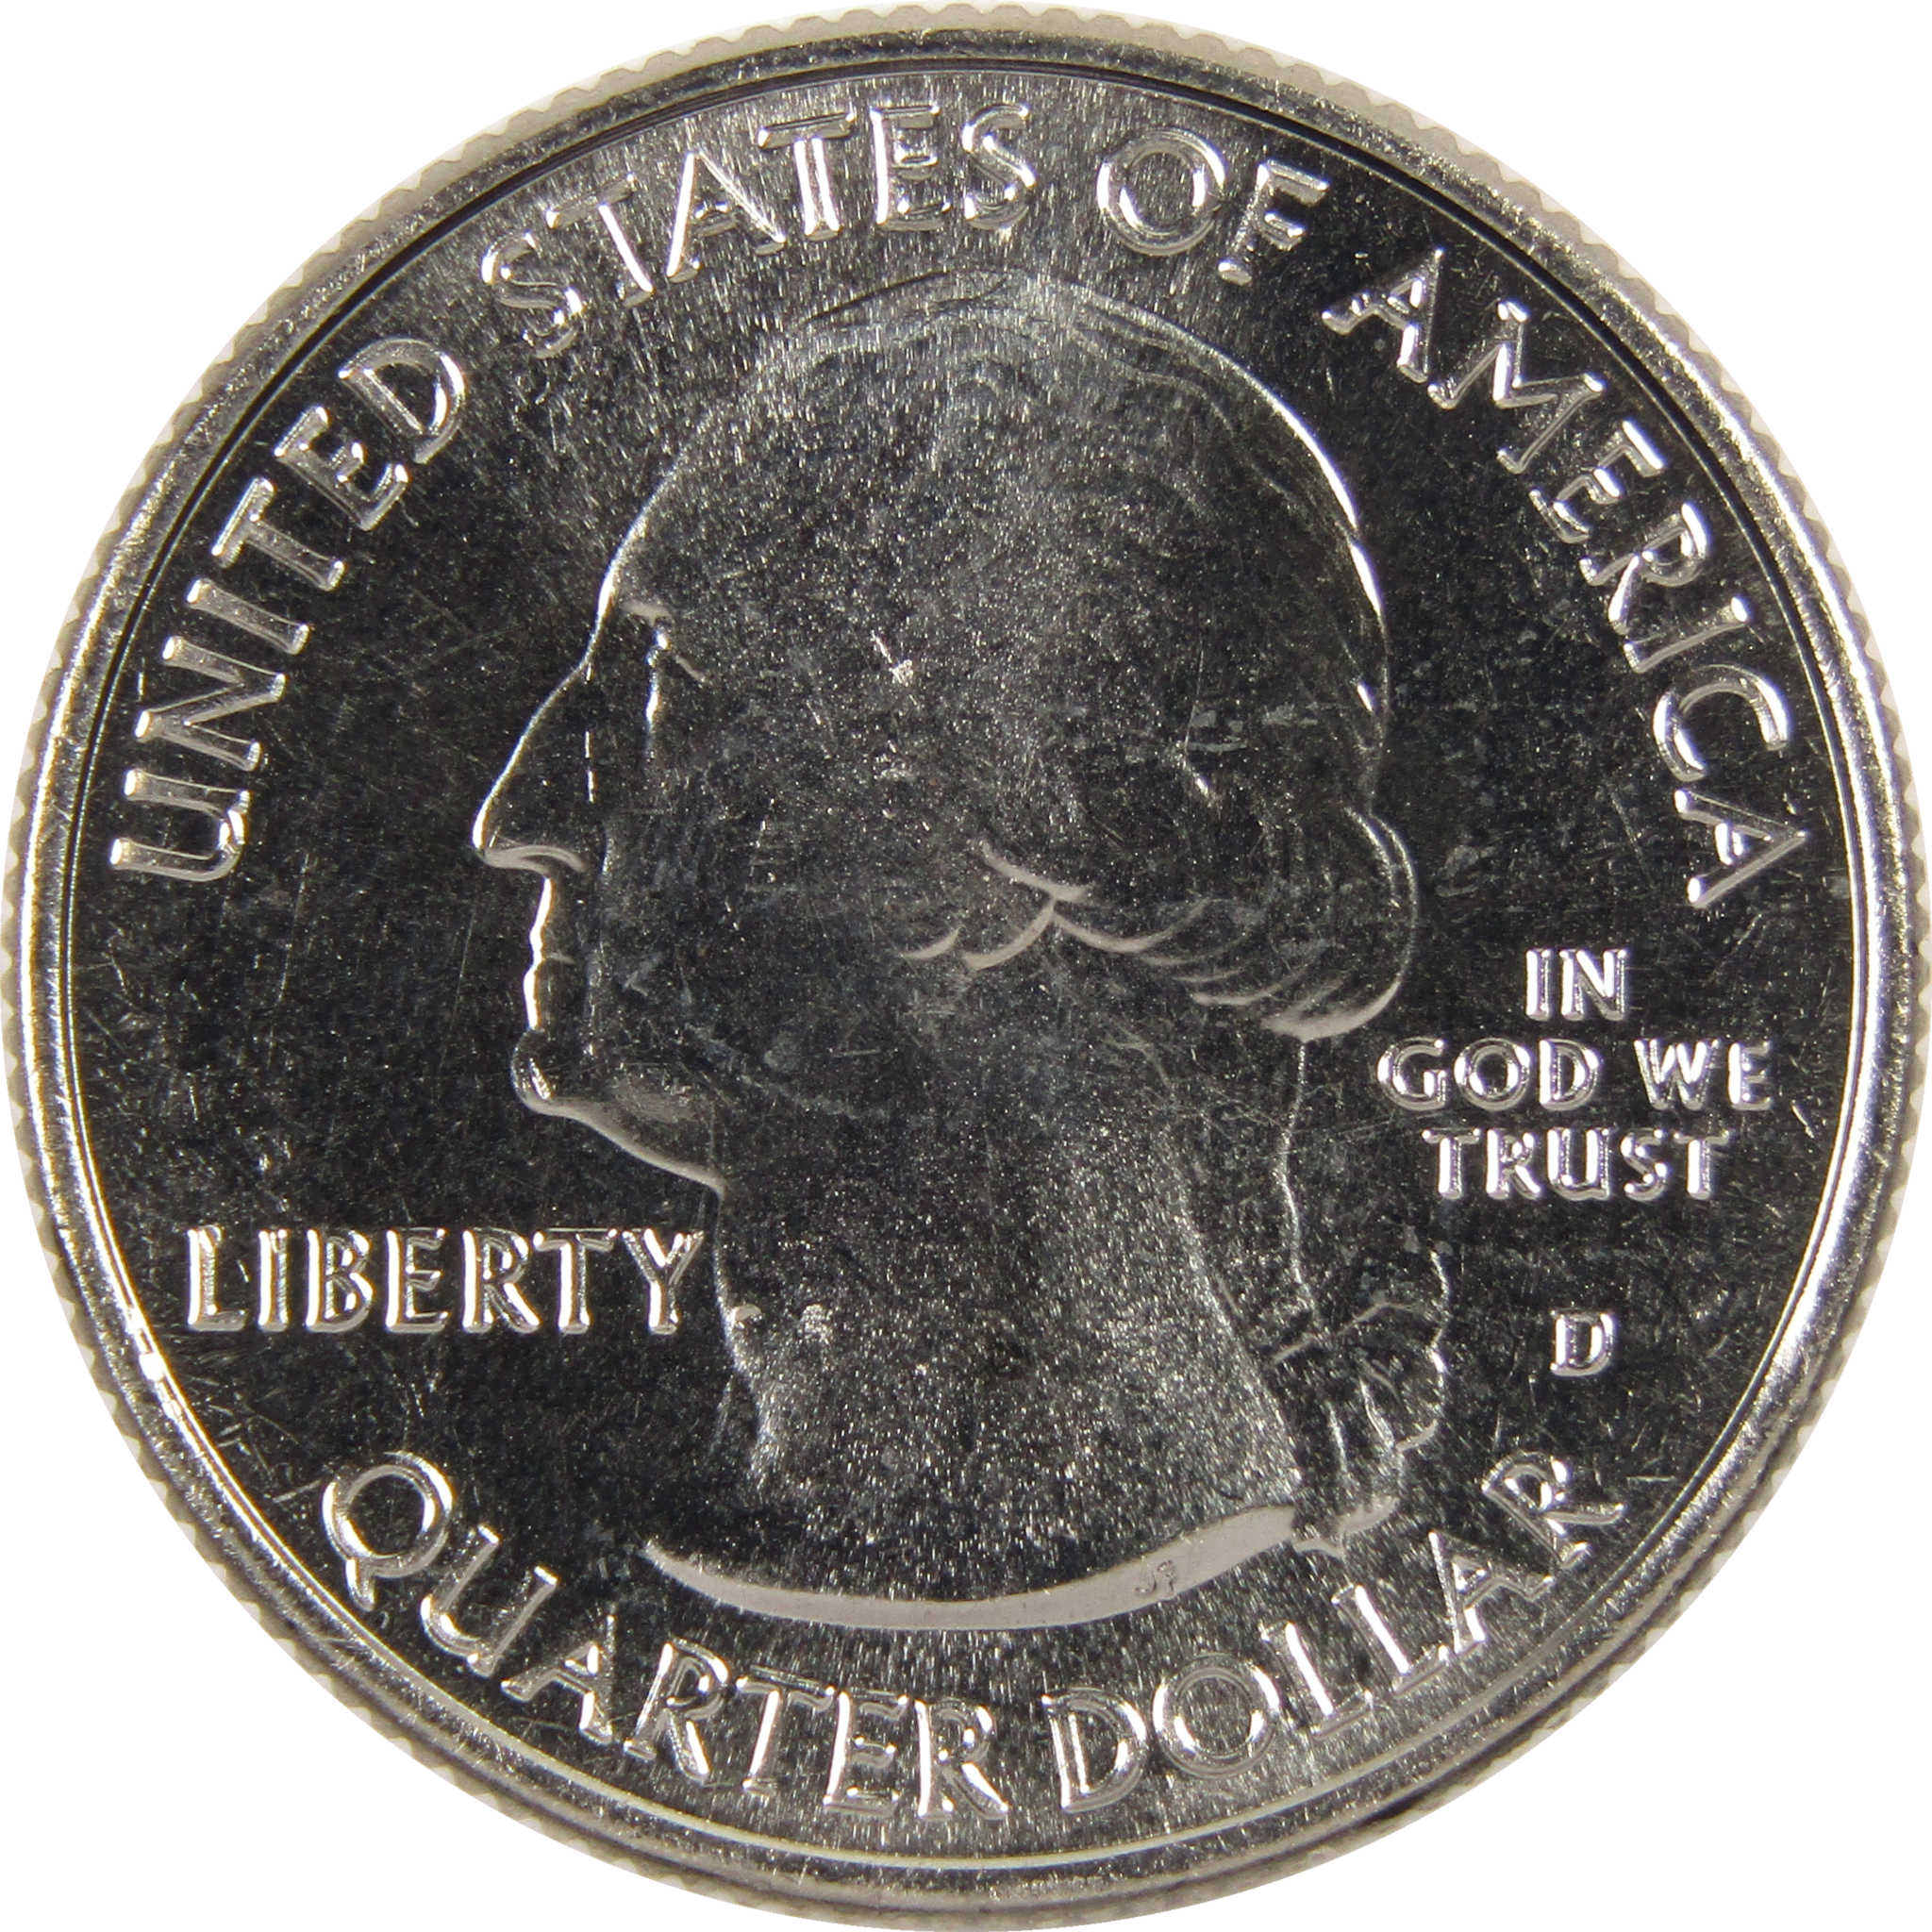 2020 D Salt River Bay National Park Quarter BU Uncirculated Clad Coin